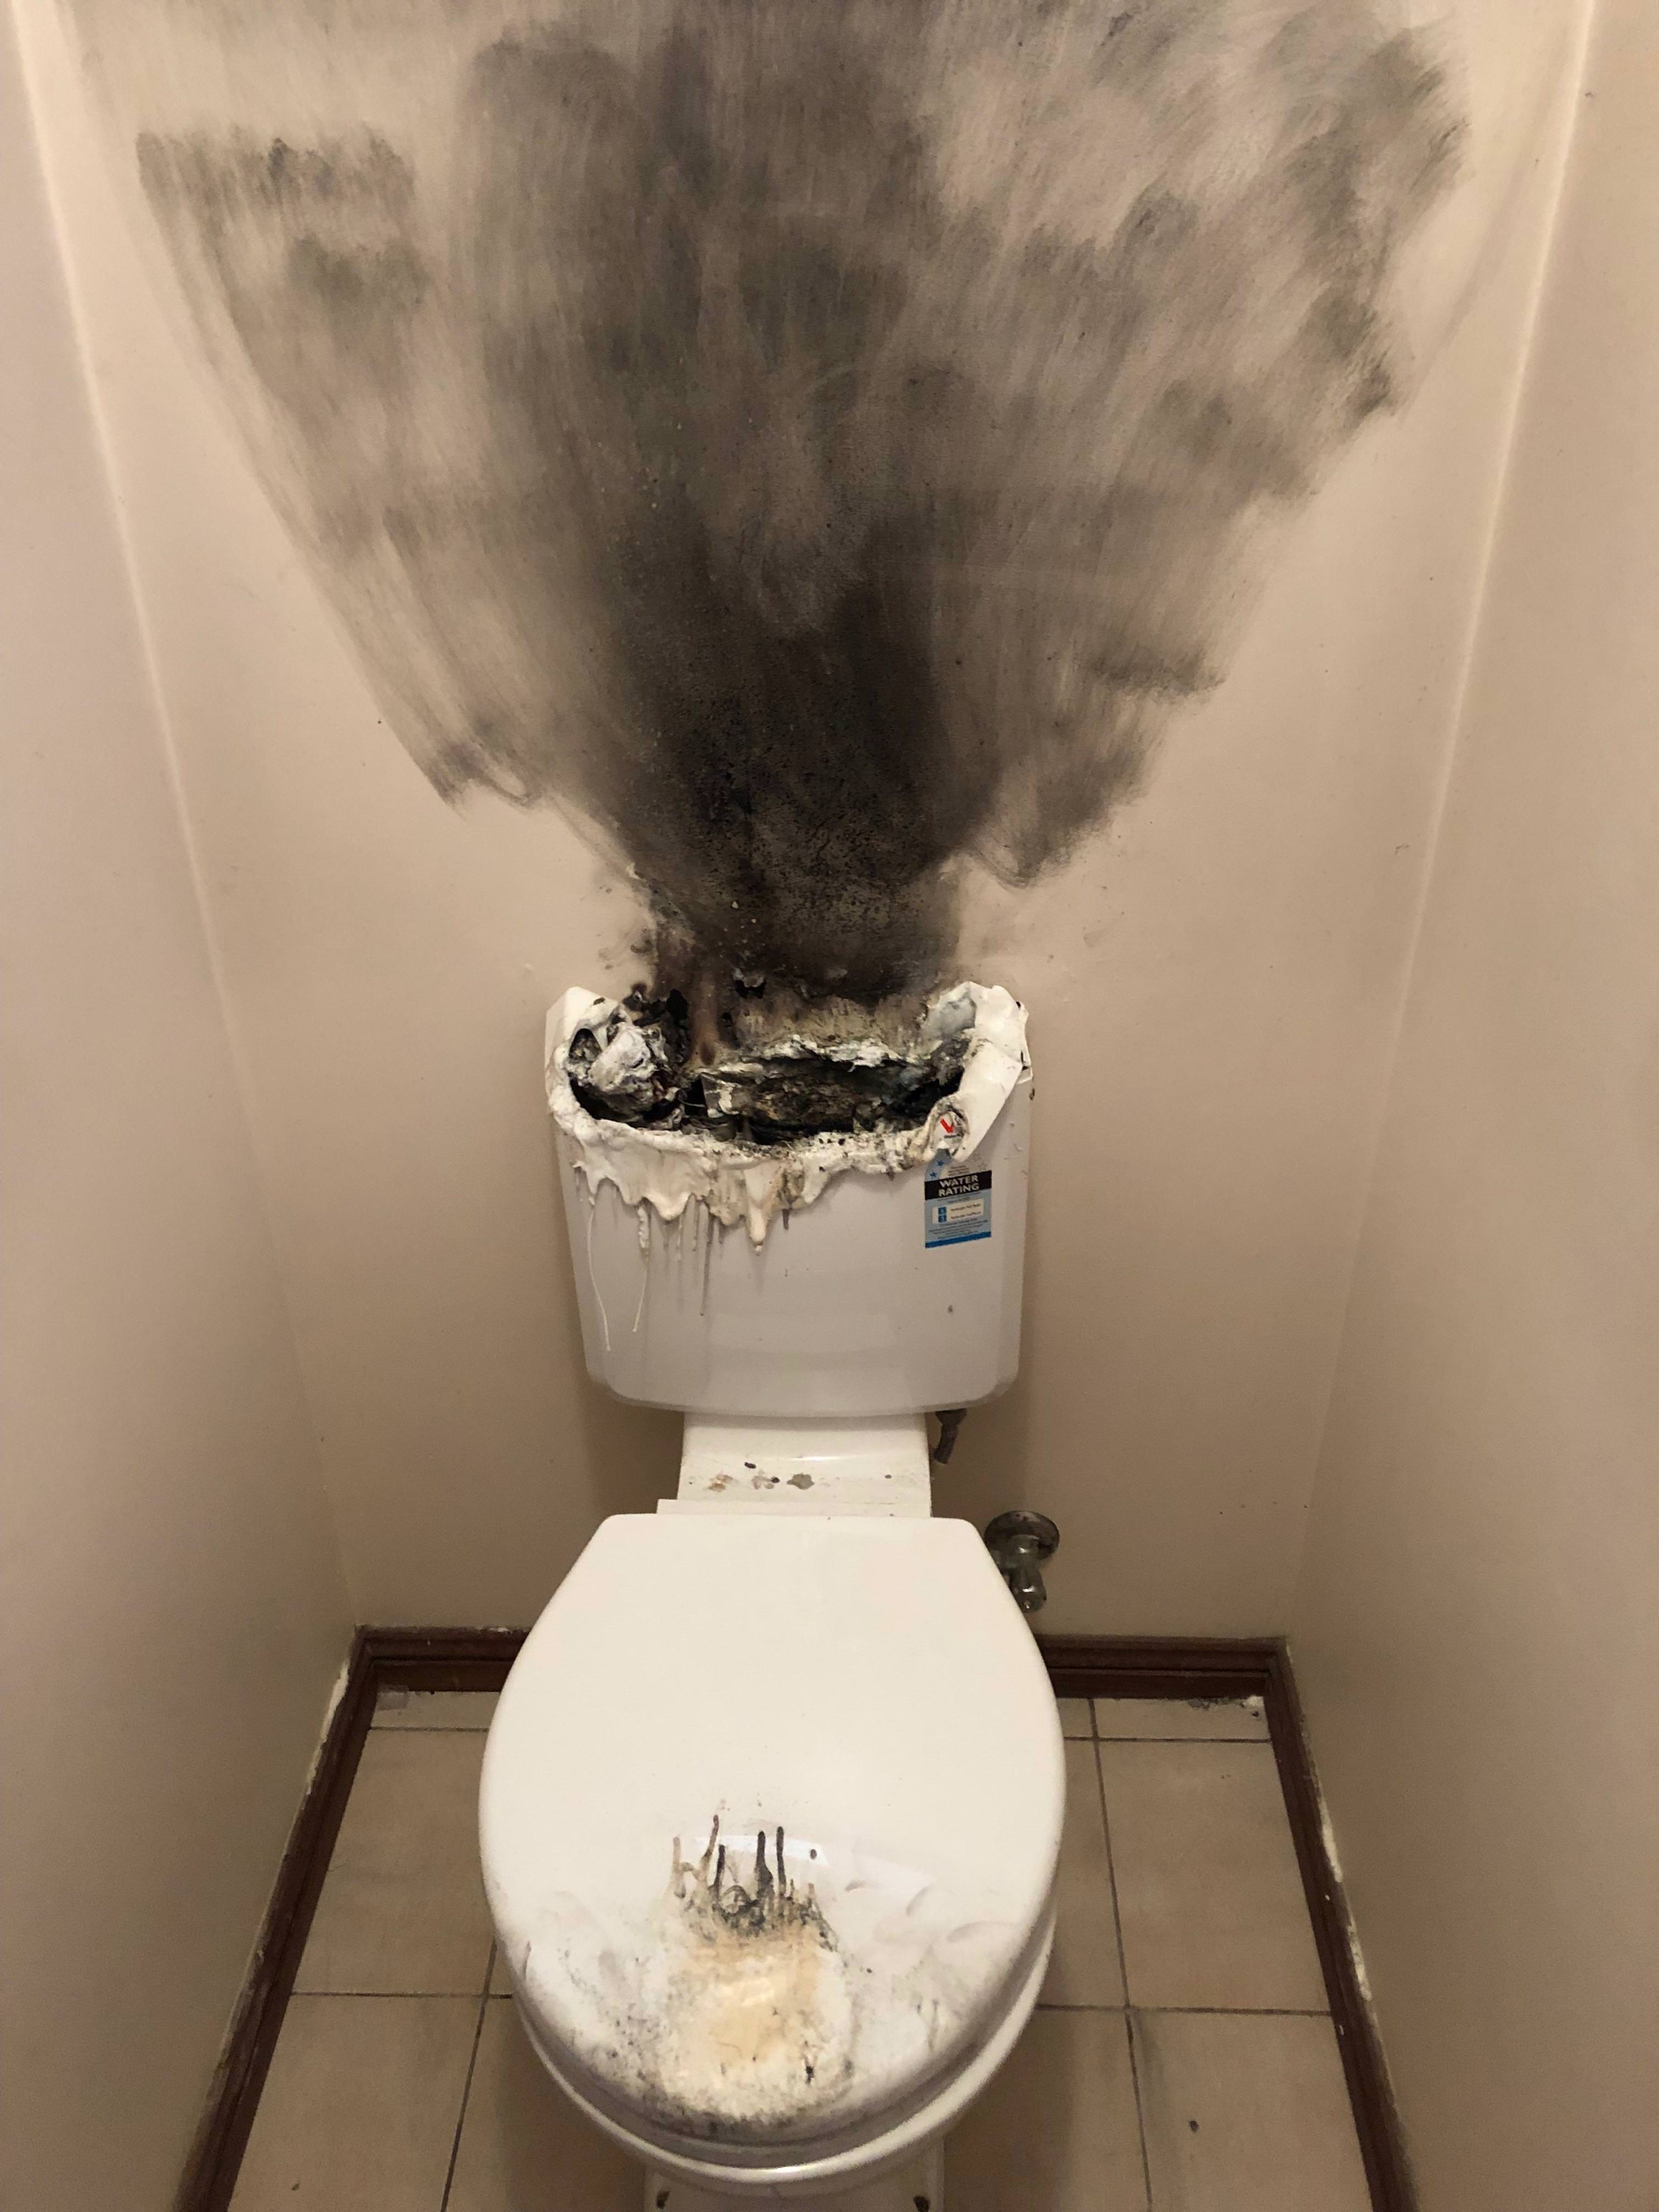 work meme of an exploded toilet